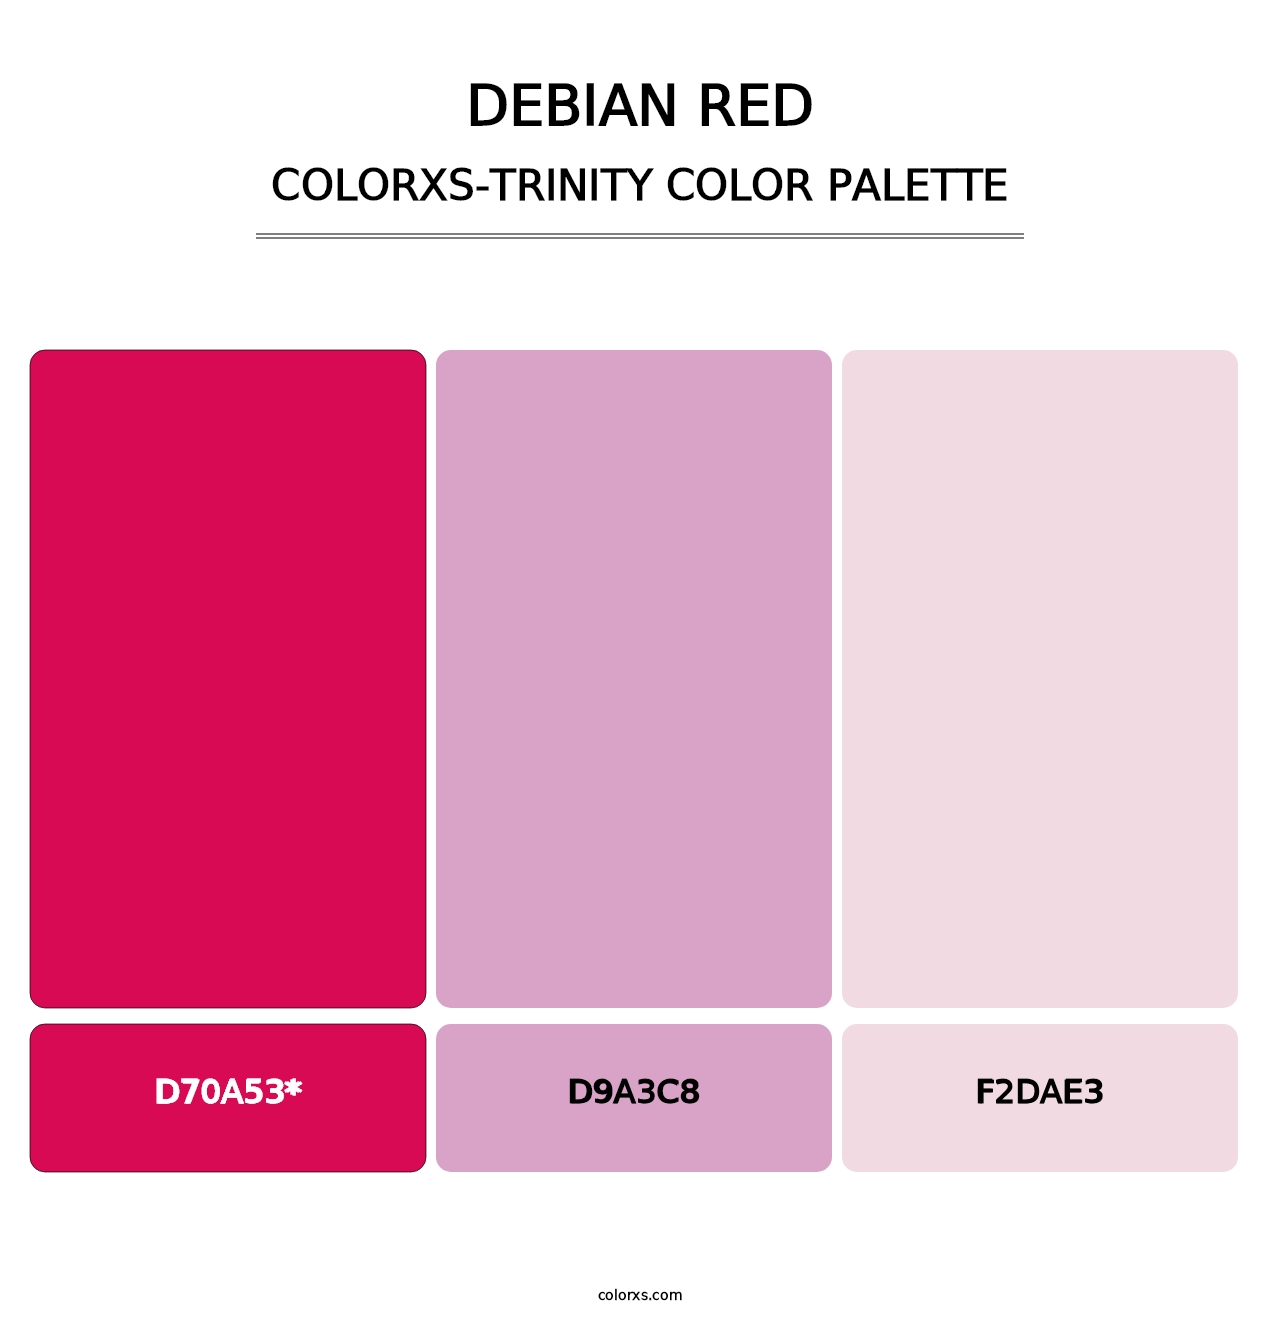 Debian red - Colorxs Trinity Palette